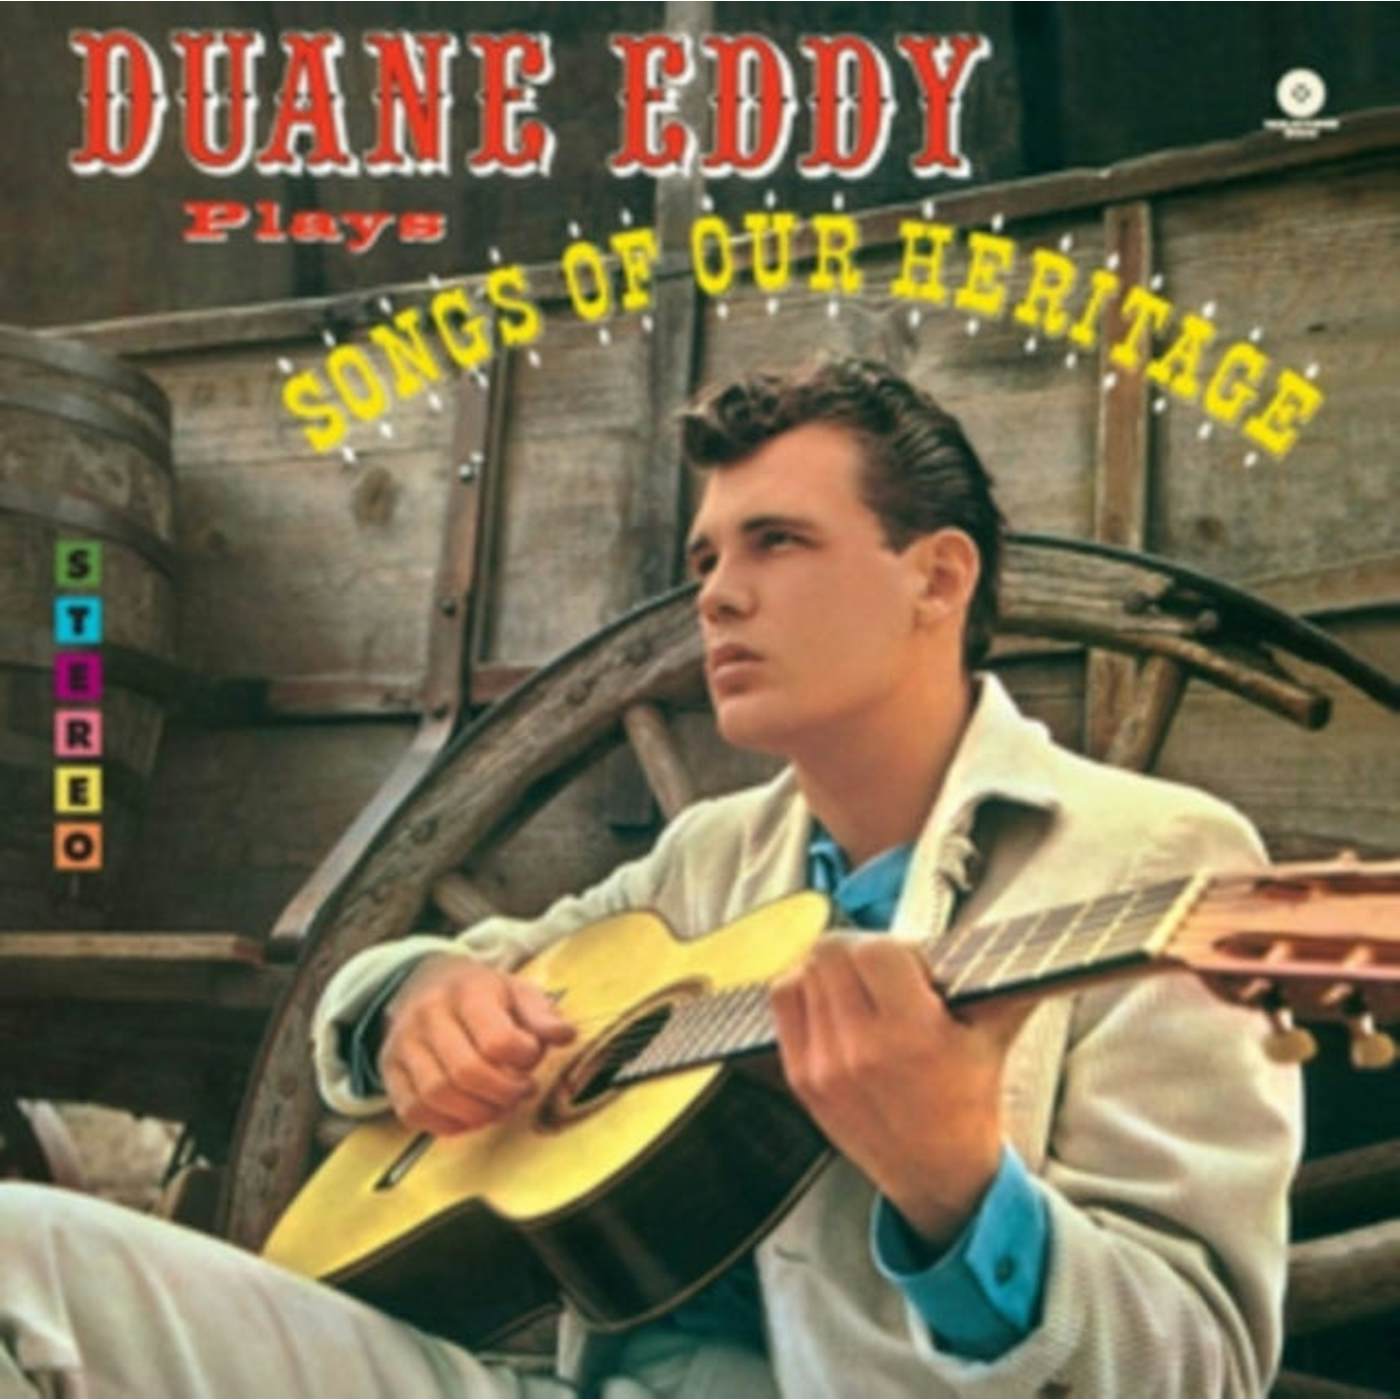 Eddy Duane LP Vinyl Record - Songs Of Our Heritage